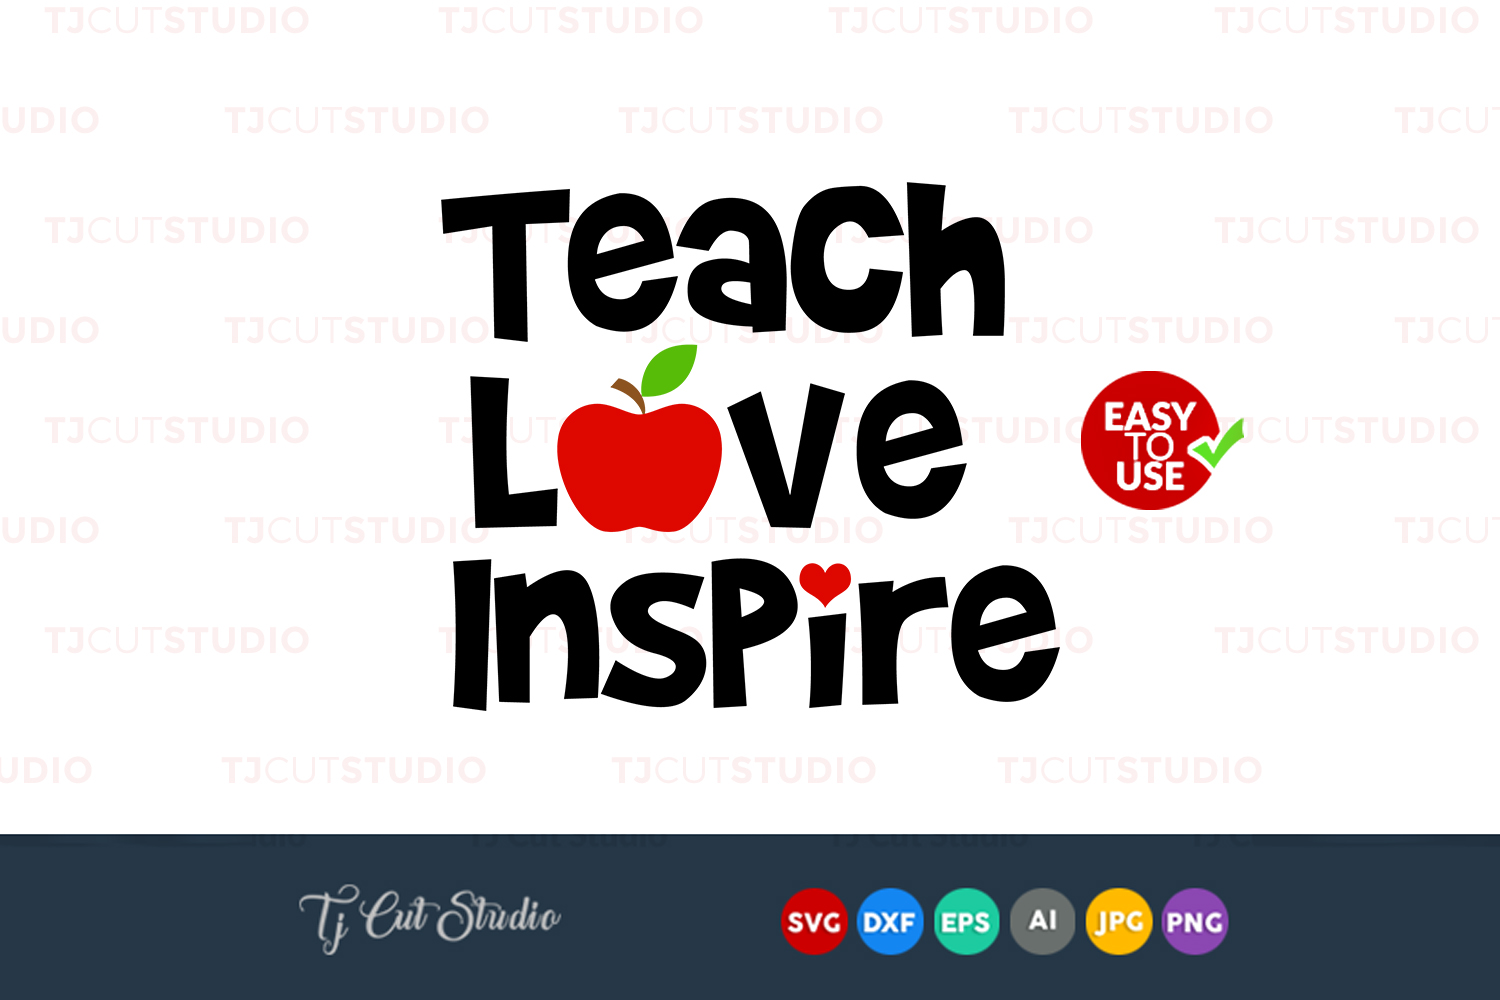 Download Teach love inspire, teacher svg, school svg, Files for ...